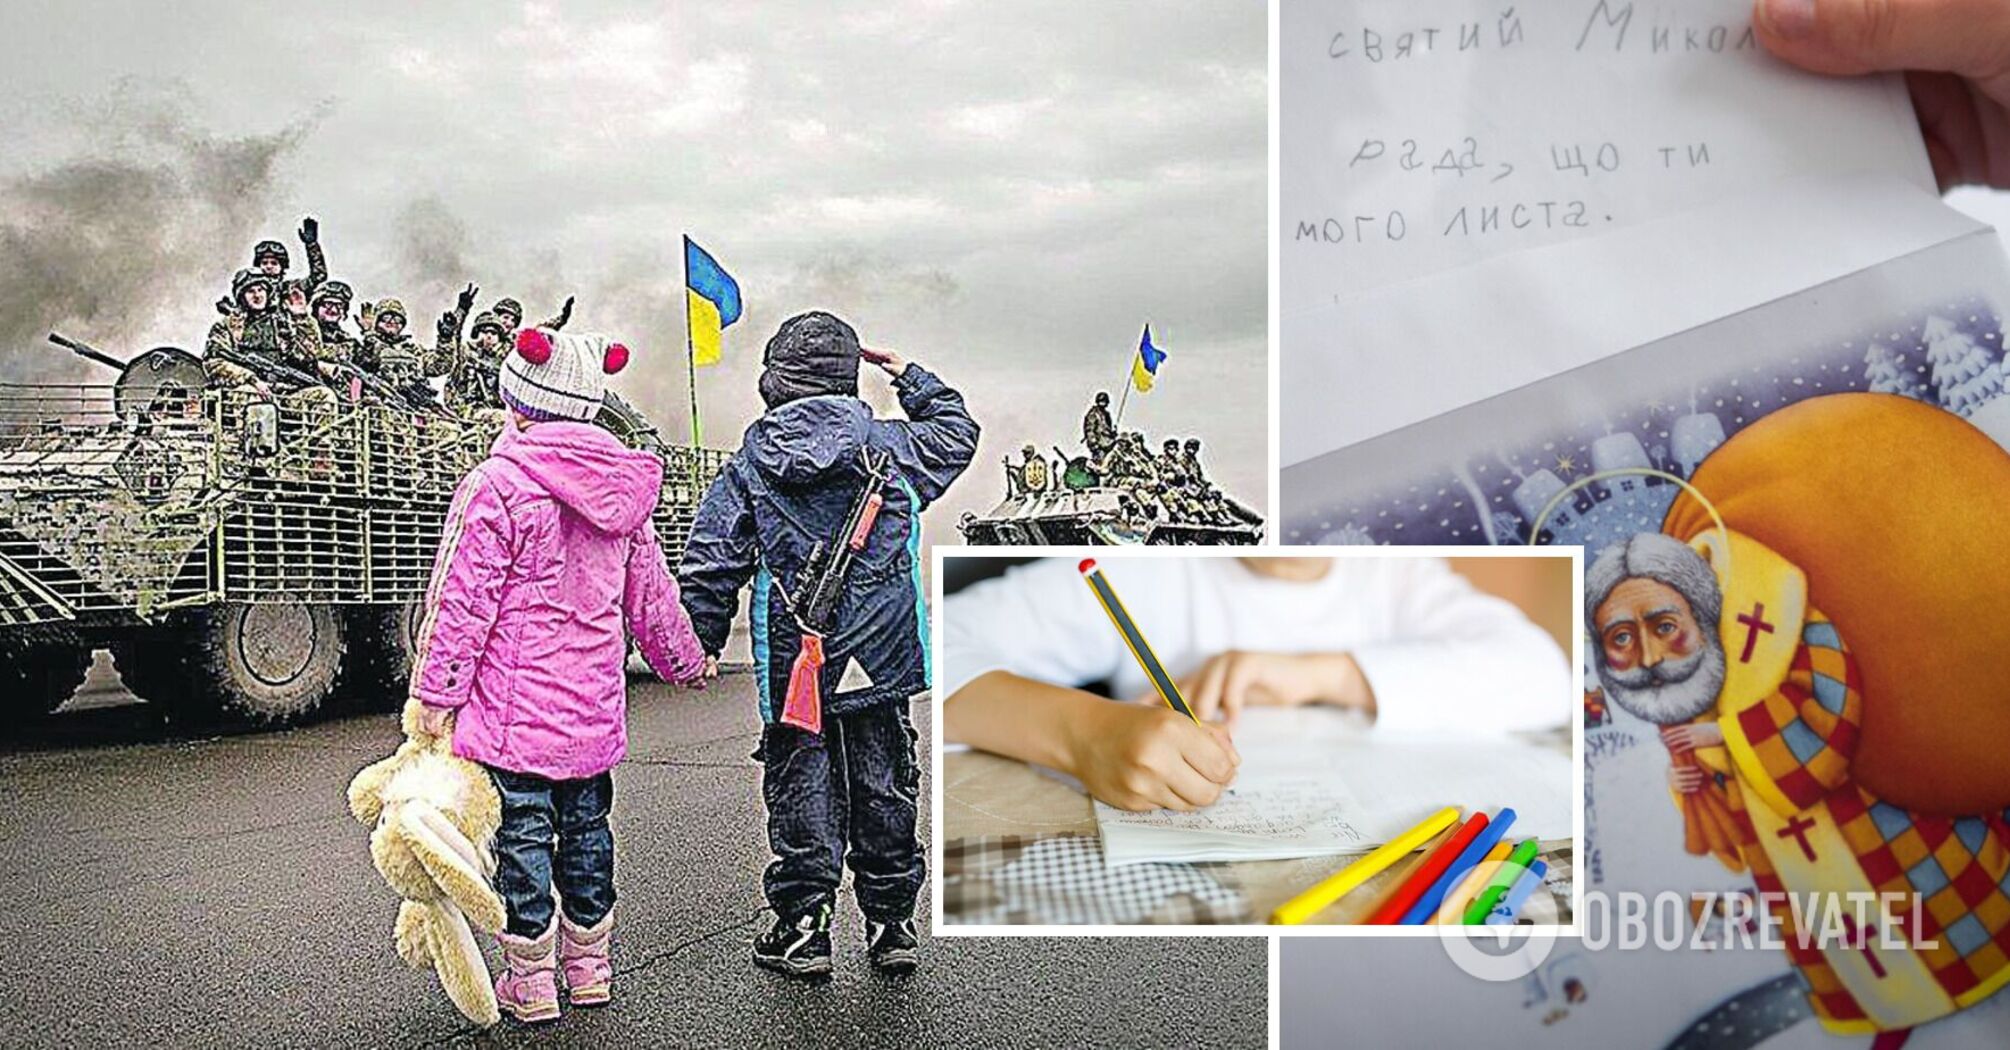 A little Ukrainian boy wrote a touching letter